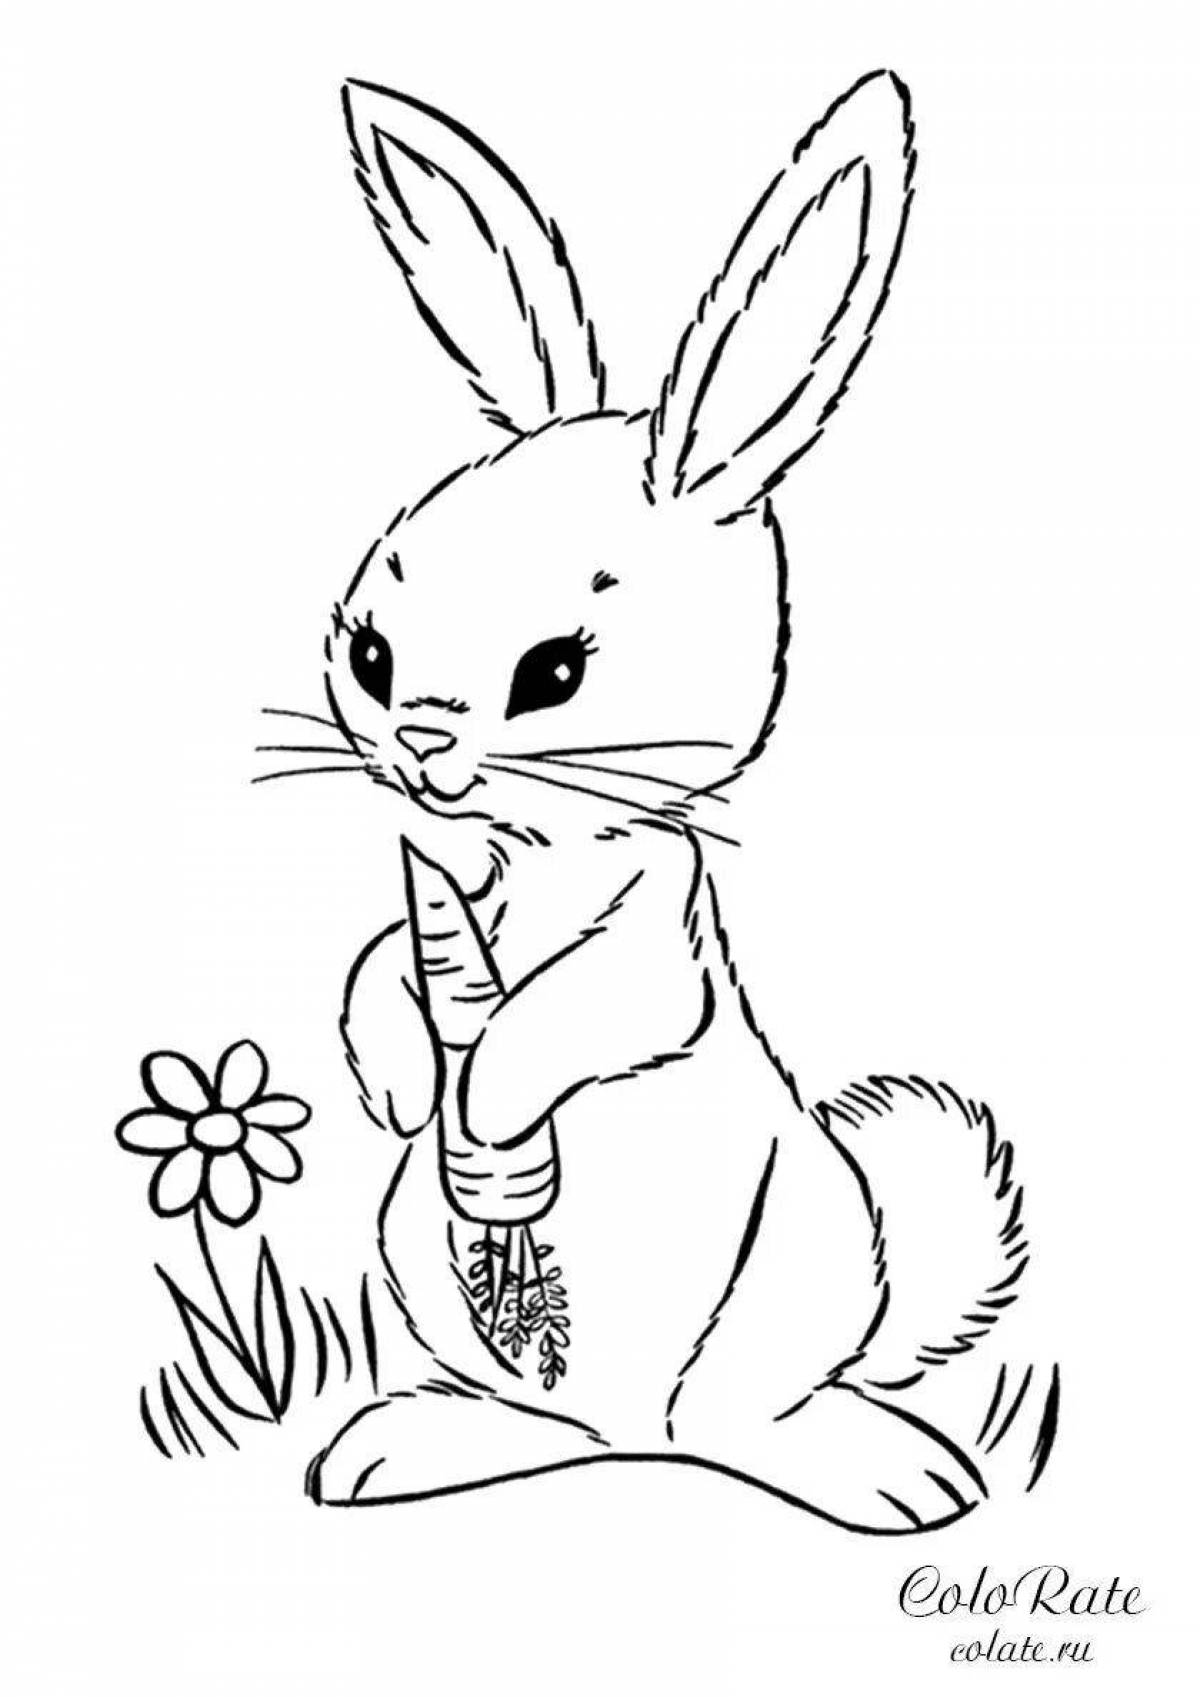 Coloring page jumping rabbit